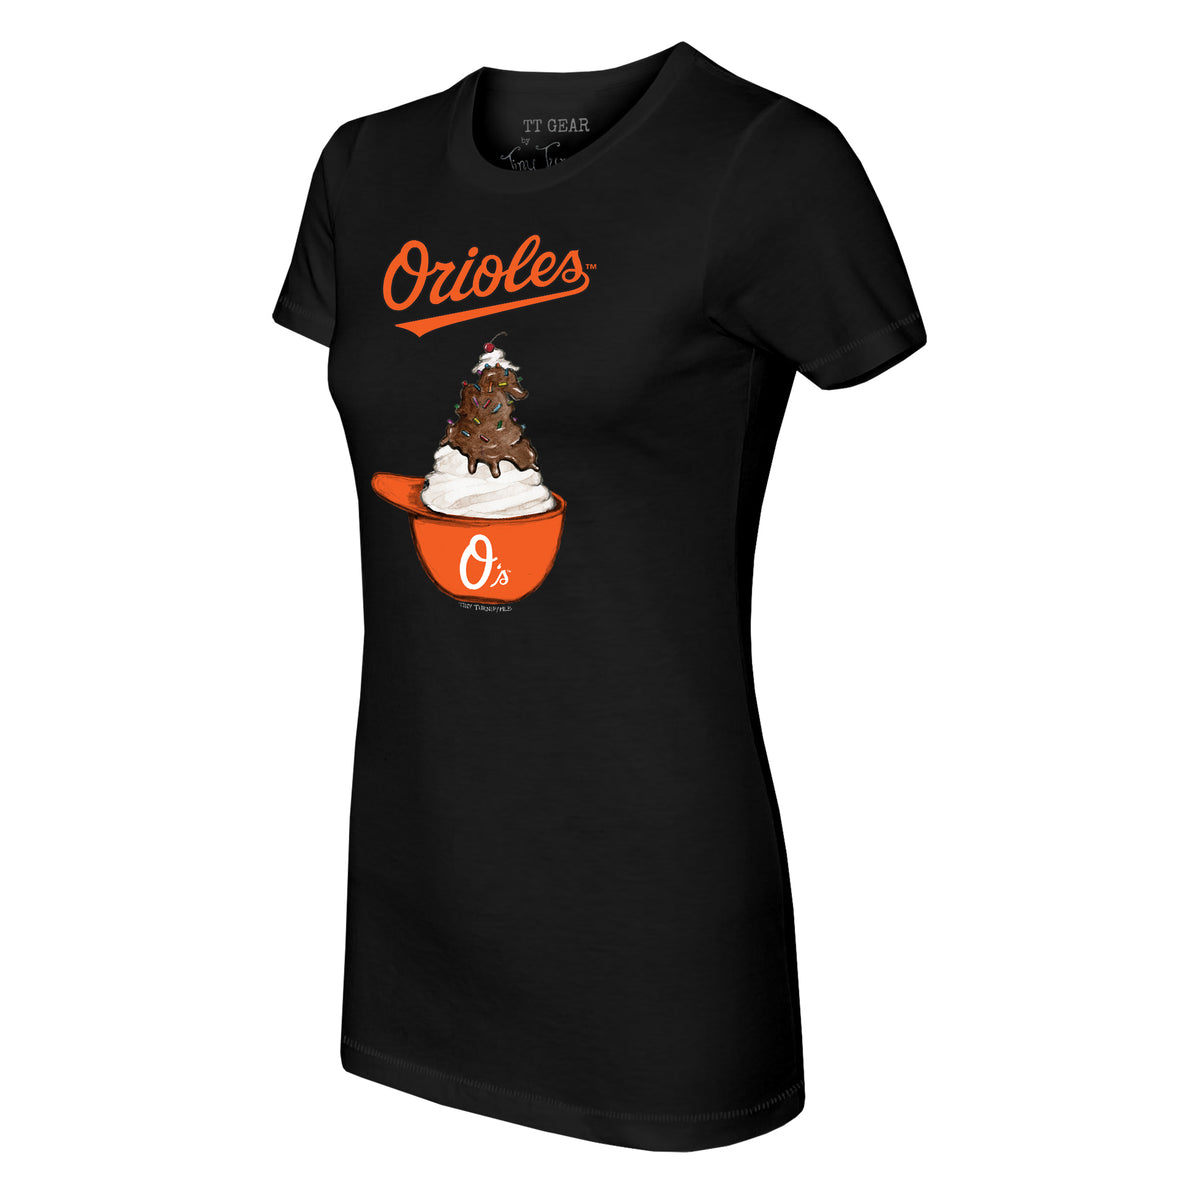 Official Women's Baltimore Orioles Gear, Womens Orioles Apparel